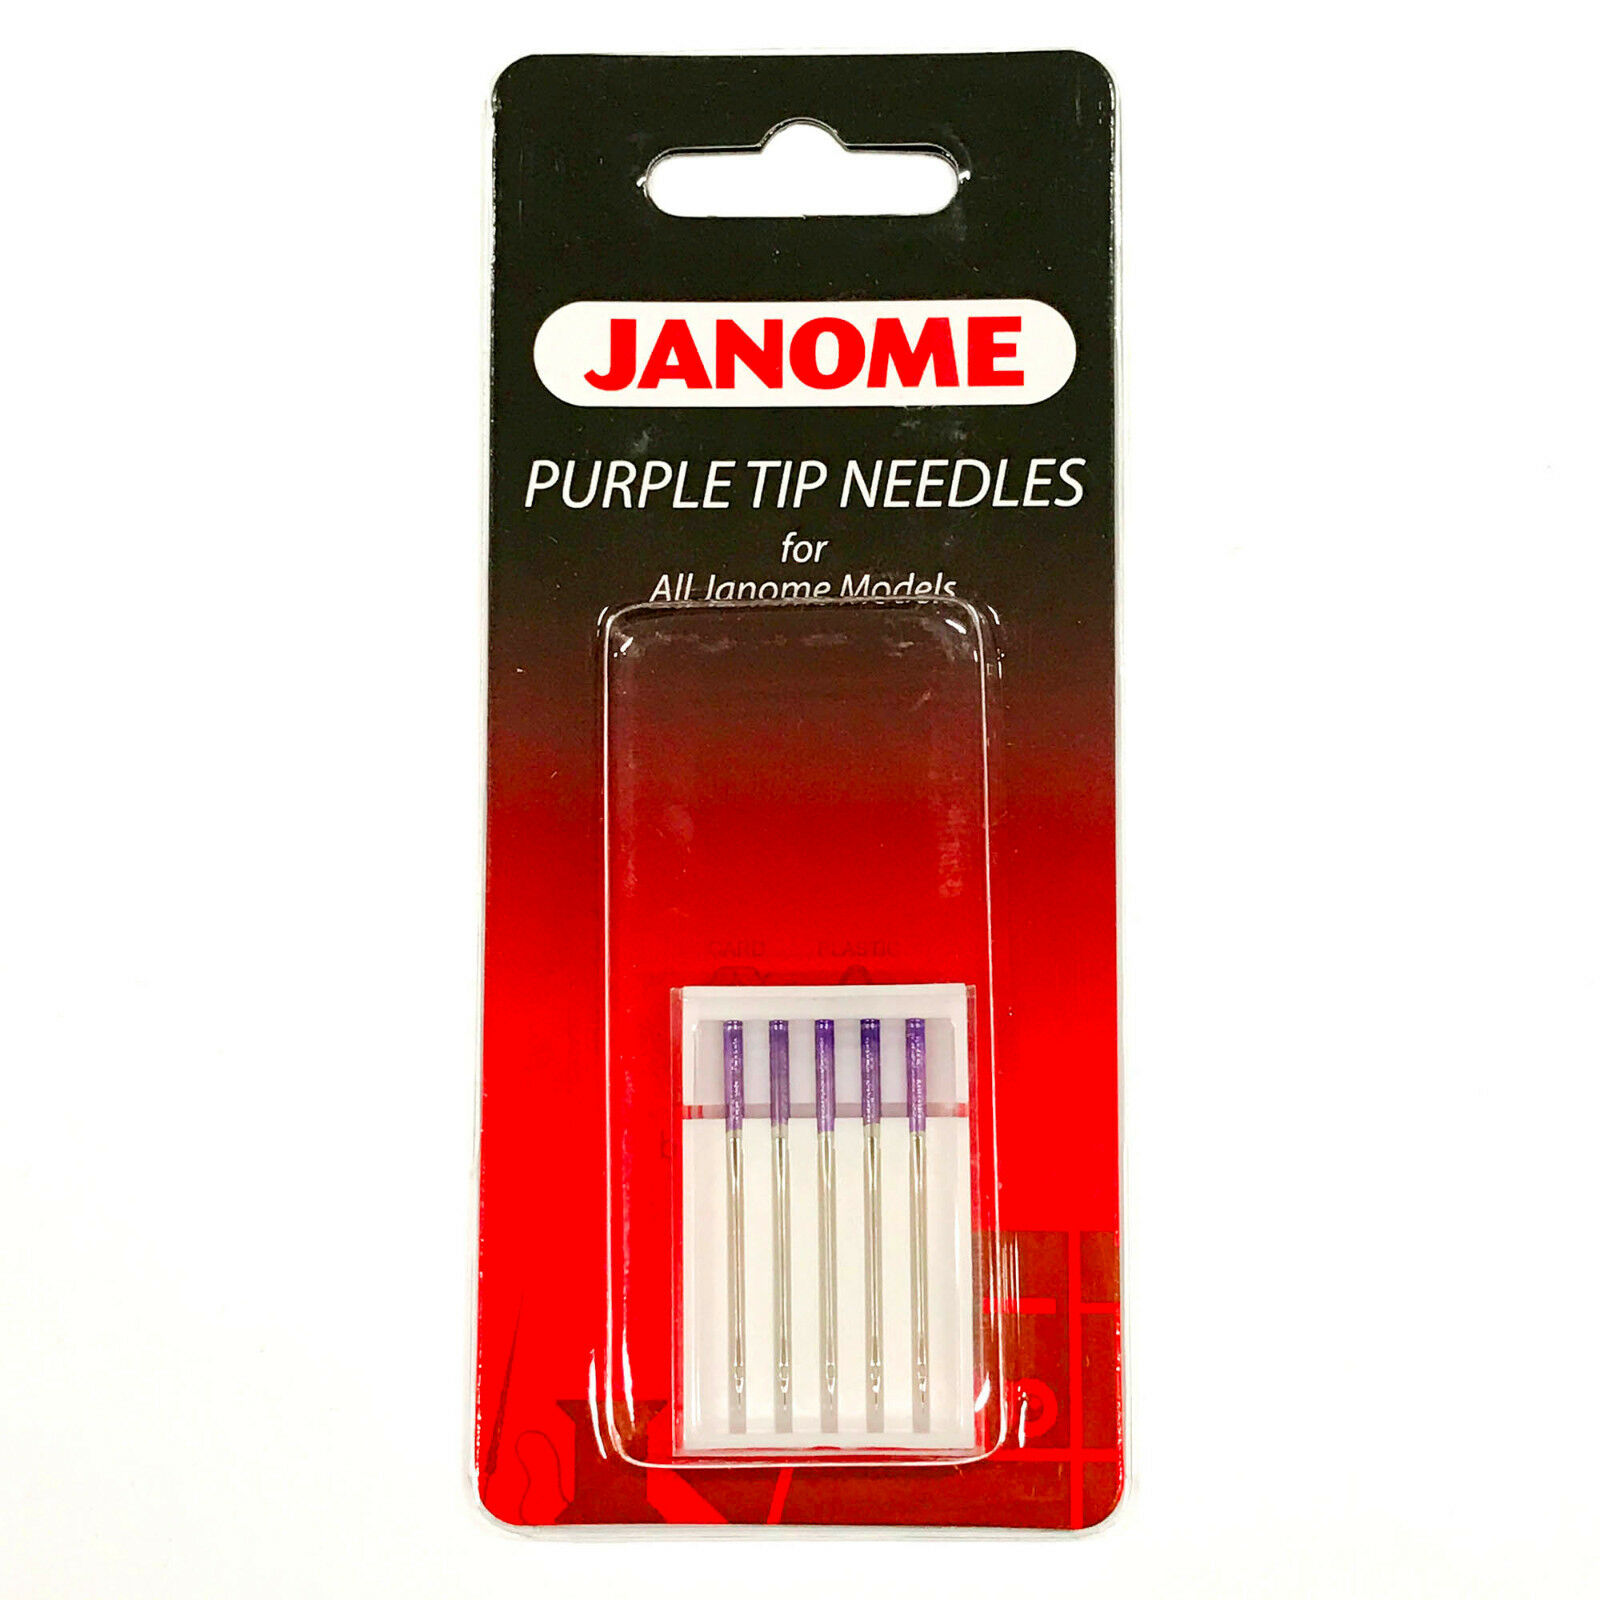 Janome Purple Tip Needles - image 1 of 1